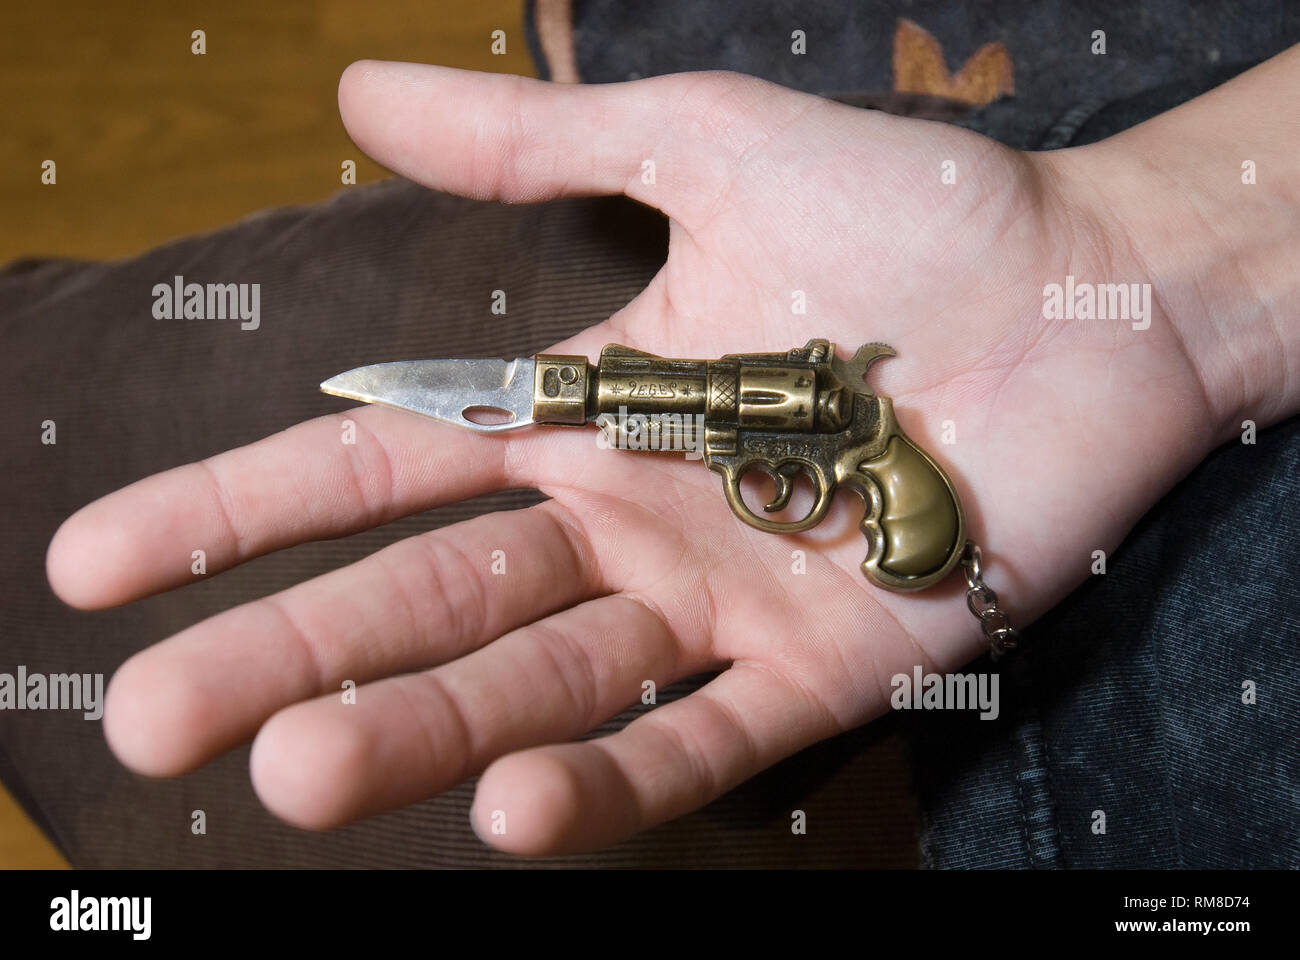 Armas brinquedo baratas da bullet gun toy gun kids